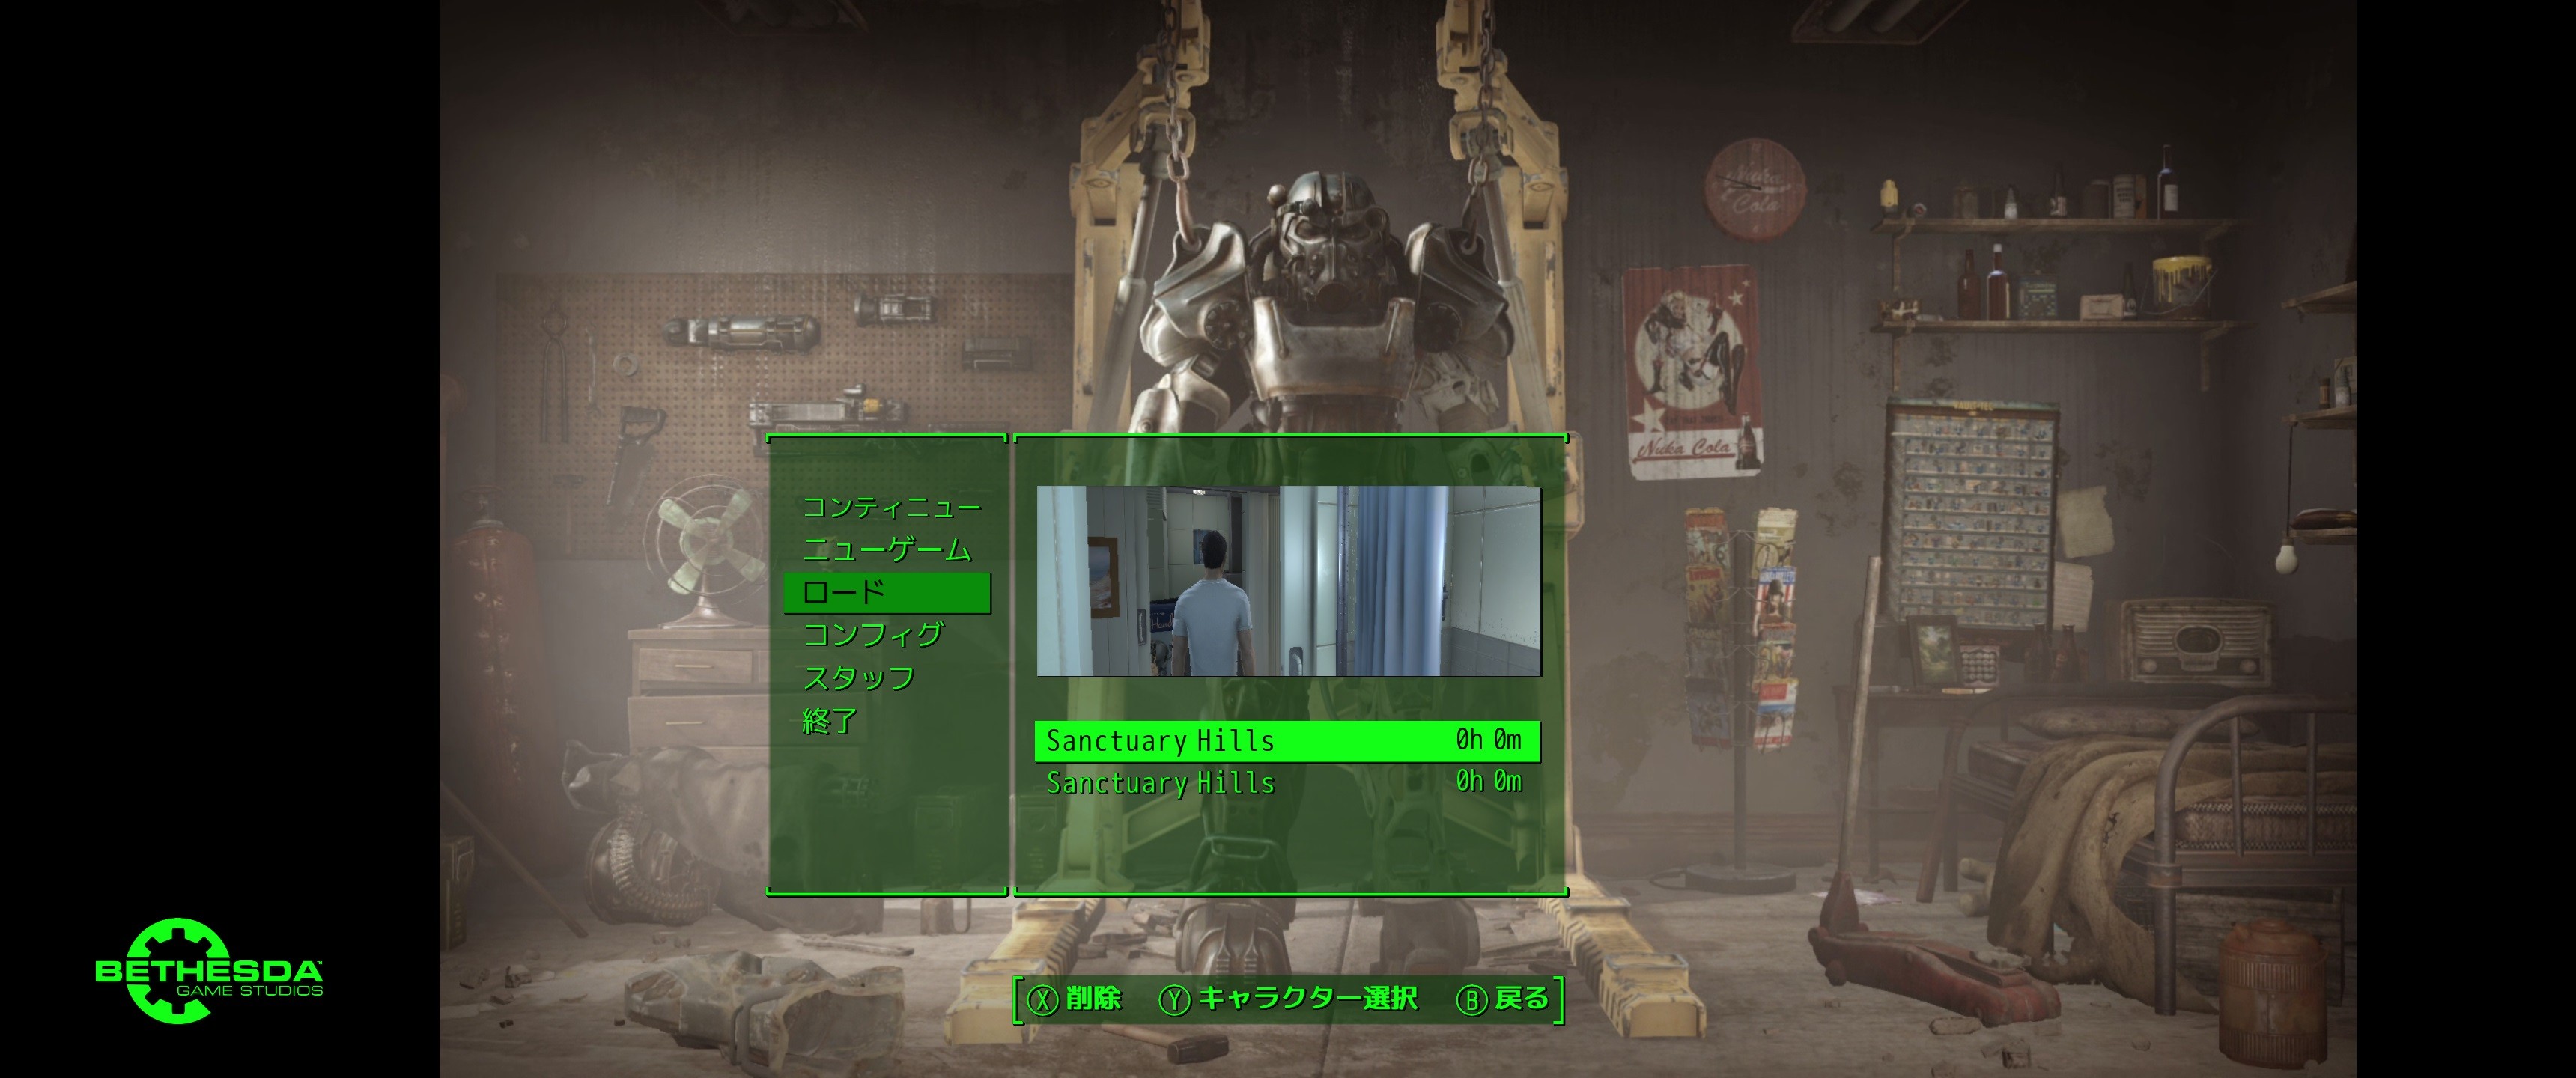 Fallout 4 Pc版 でflawless Widescreenが不要なウルトラワイド解像度でインターフェースを修正するmod Ultra Widescreen Patches が登場 自作とゲームと趣味の日々